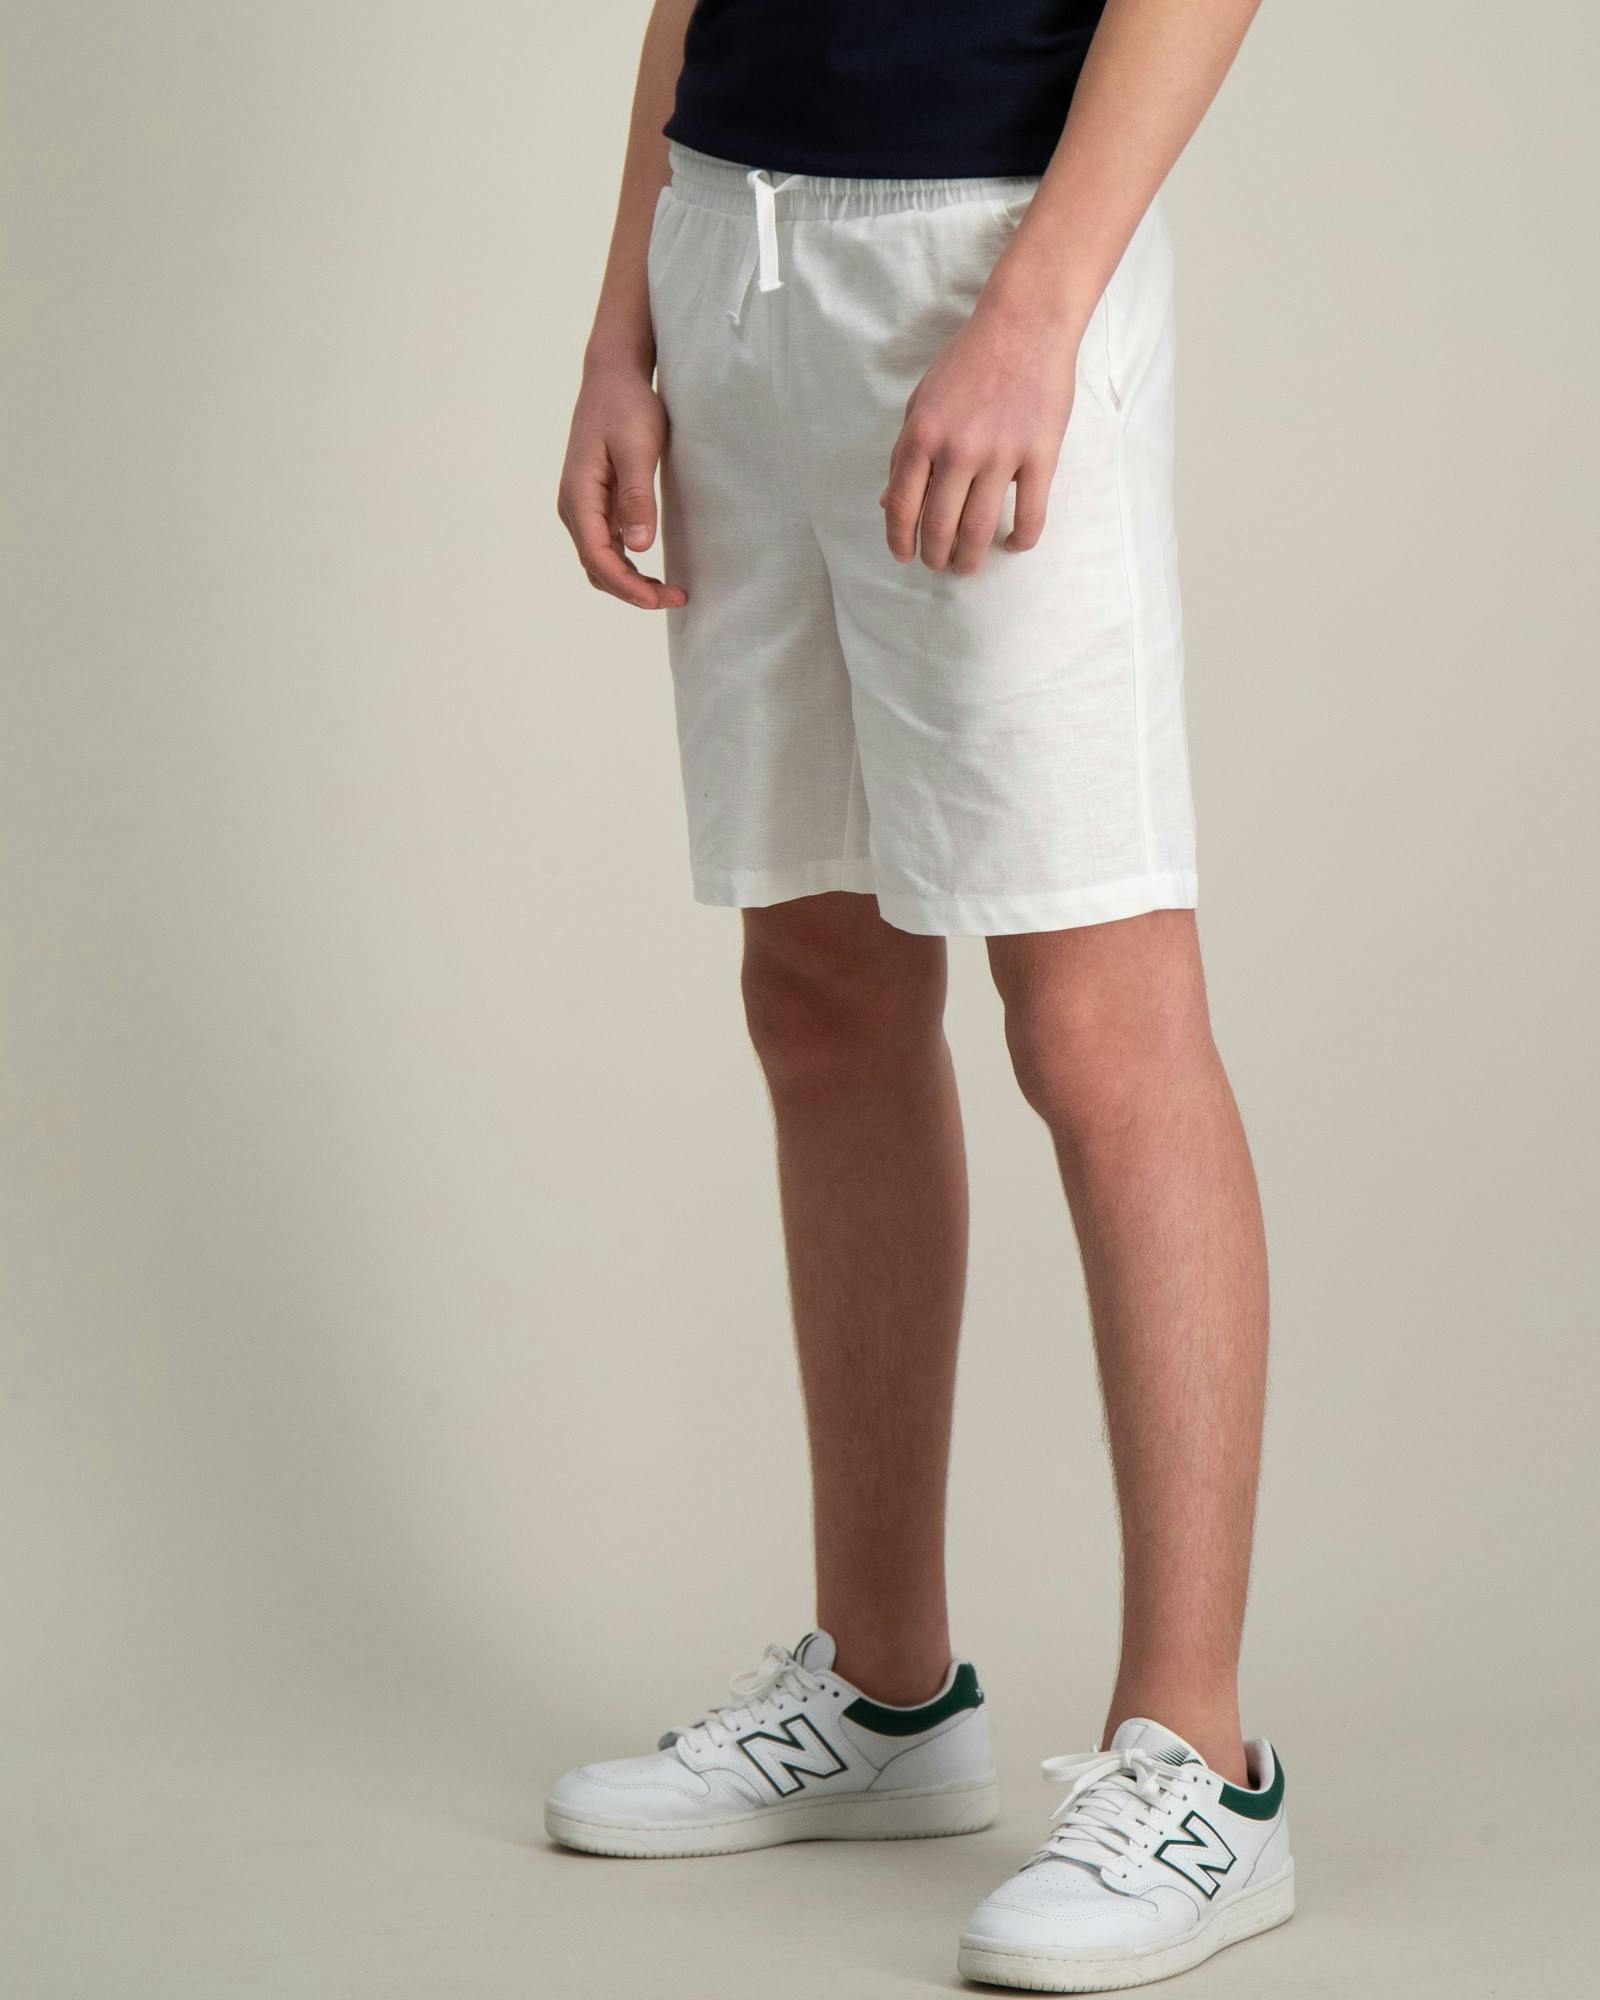 Ole Linen shorts